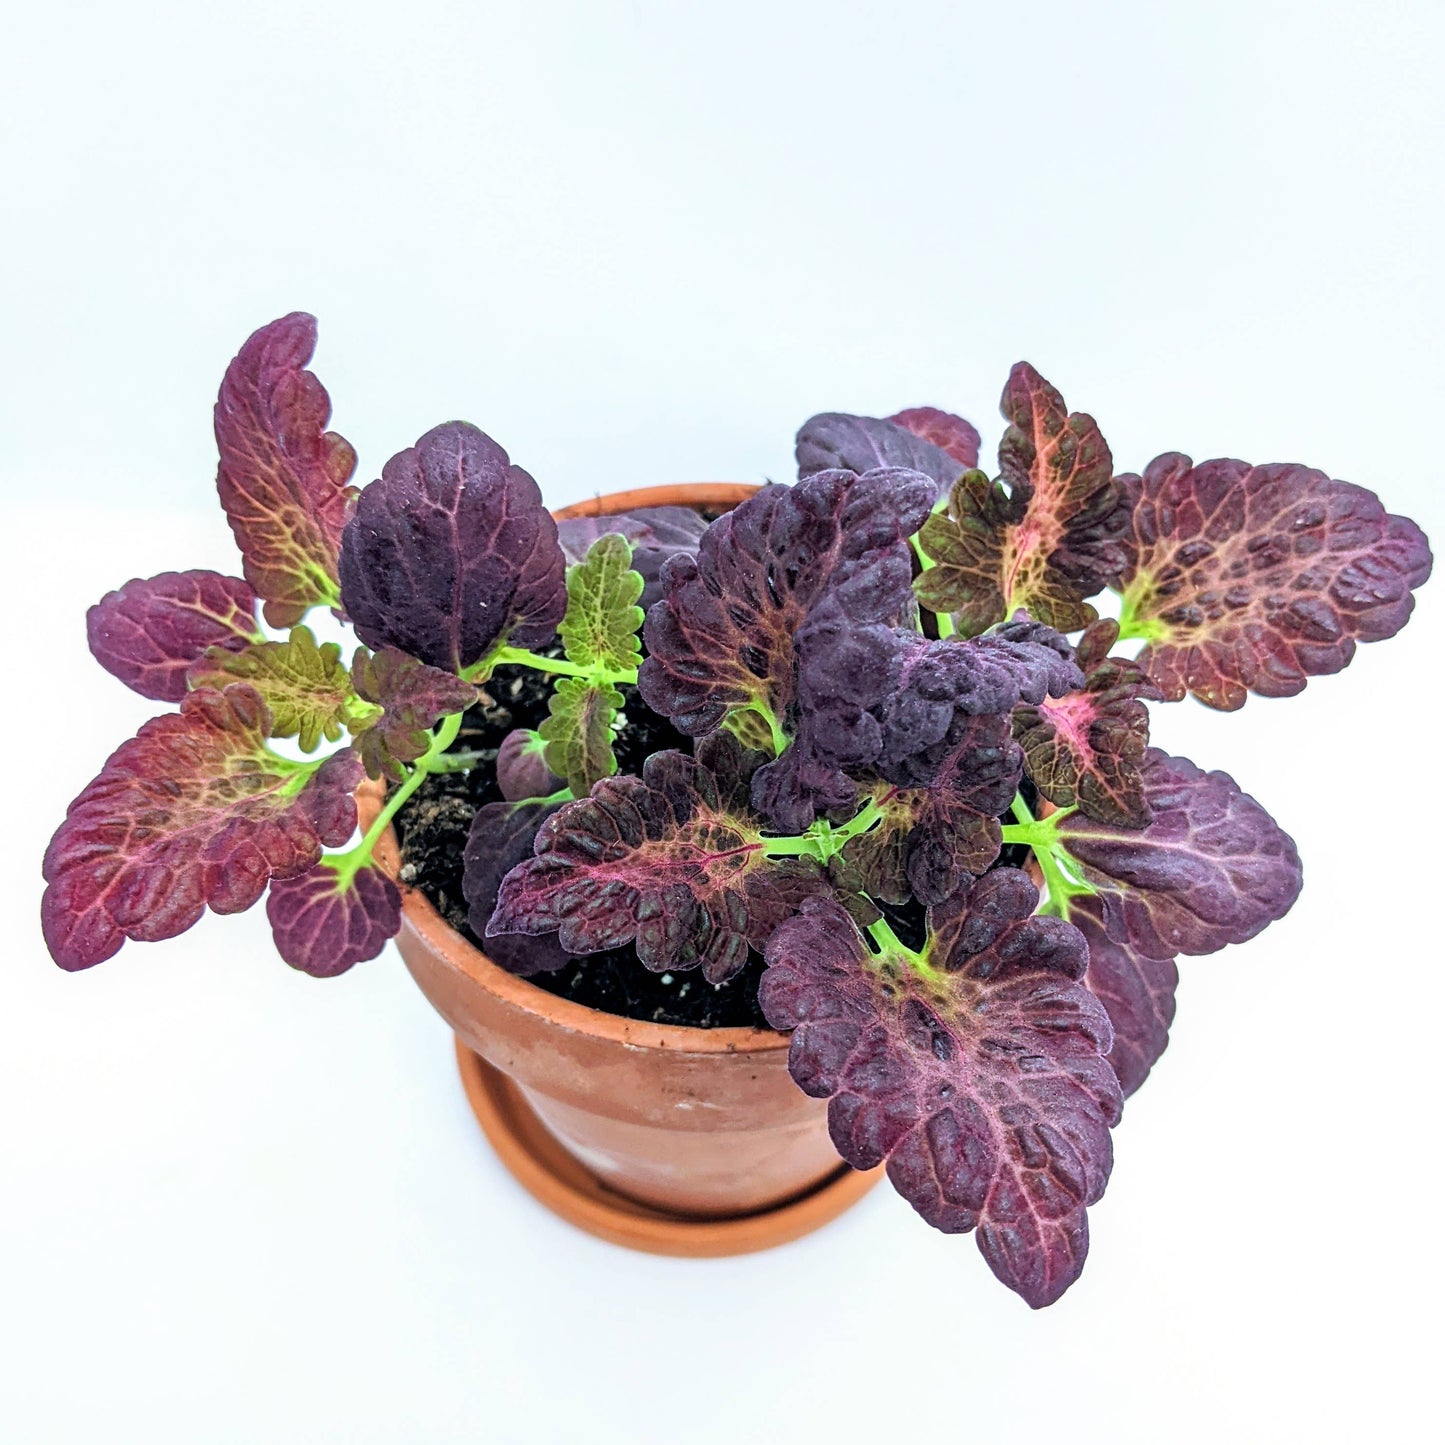 Plantflix - Grow a Black Dragon Coleus Plant Seed Kit